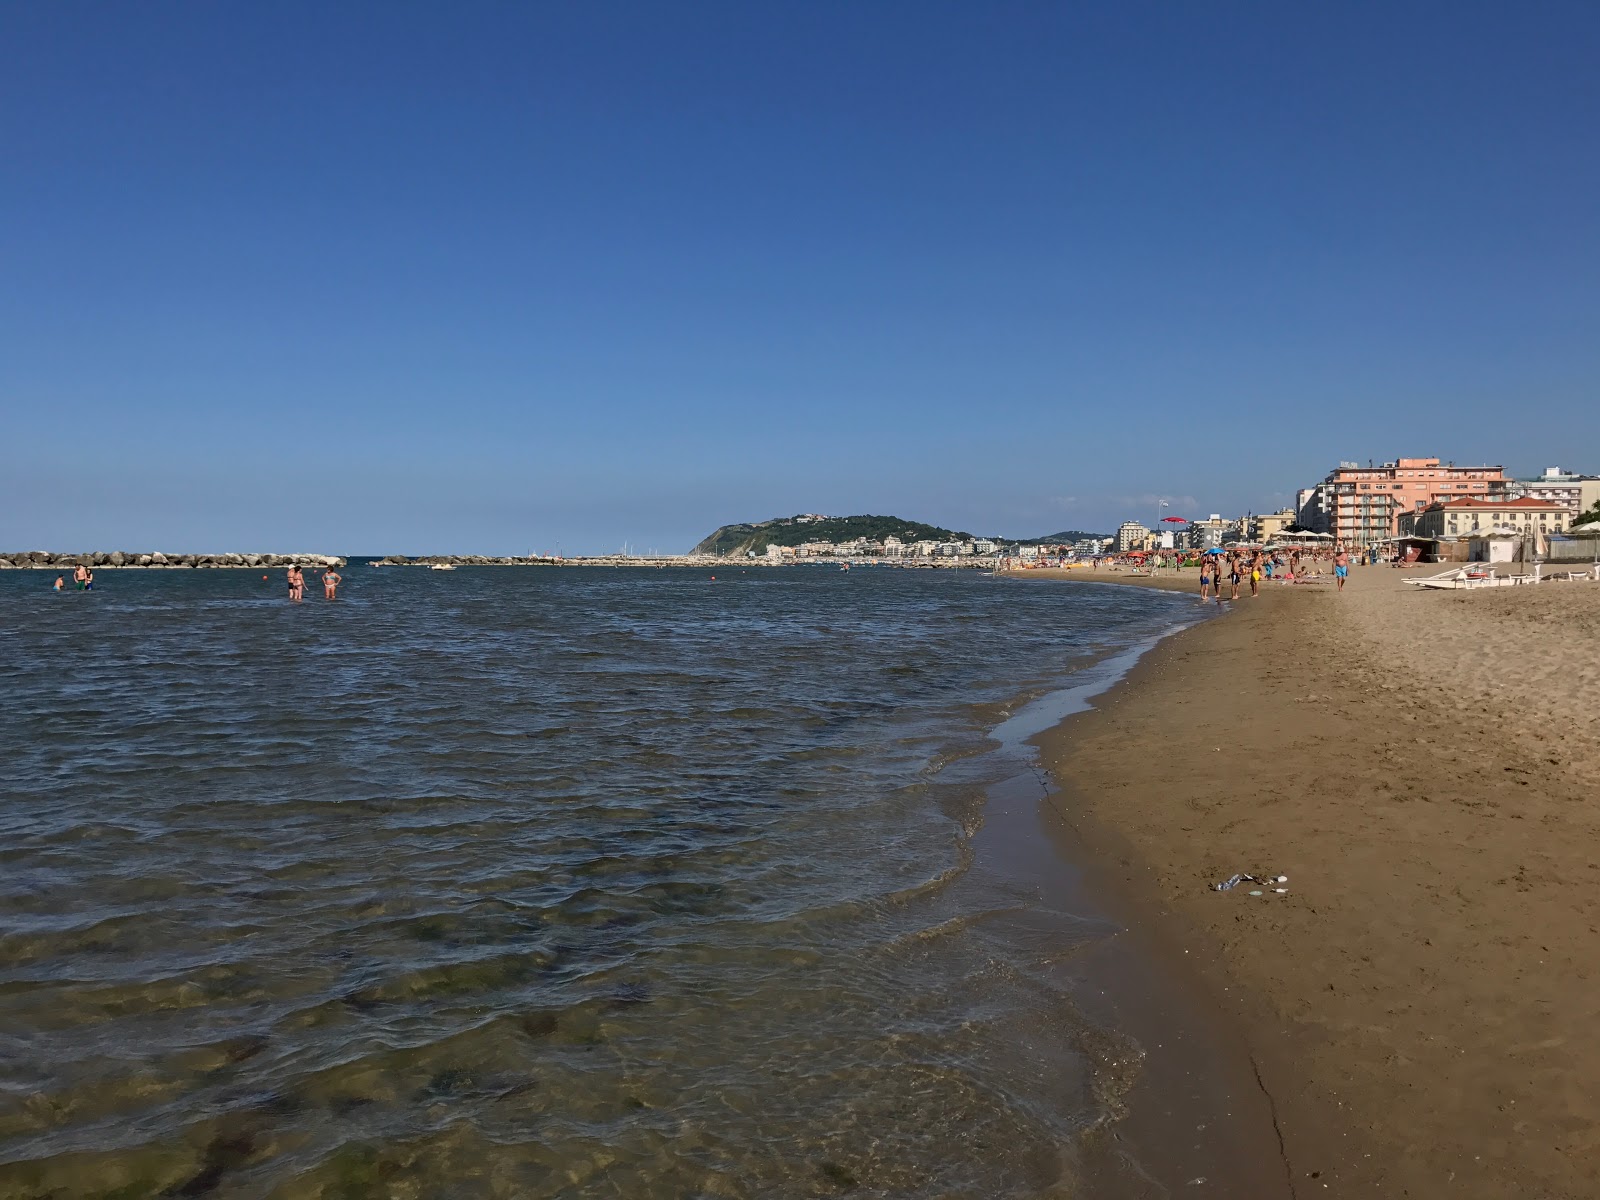 Foto von Spiaggia di Cattolica II mit heller sand Oberfläche